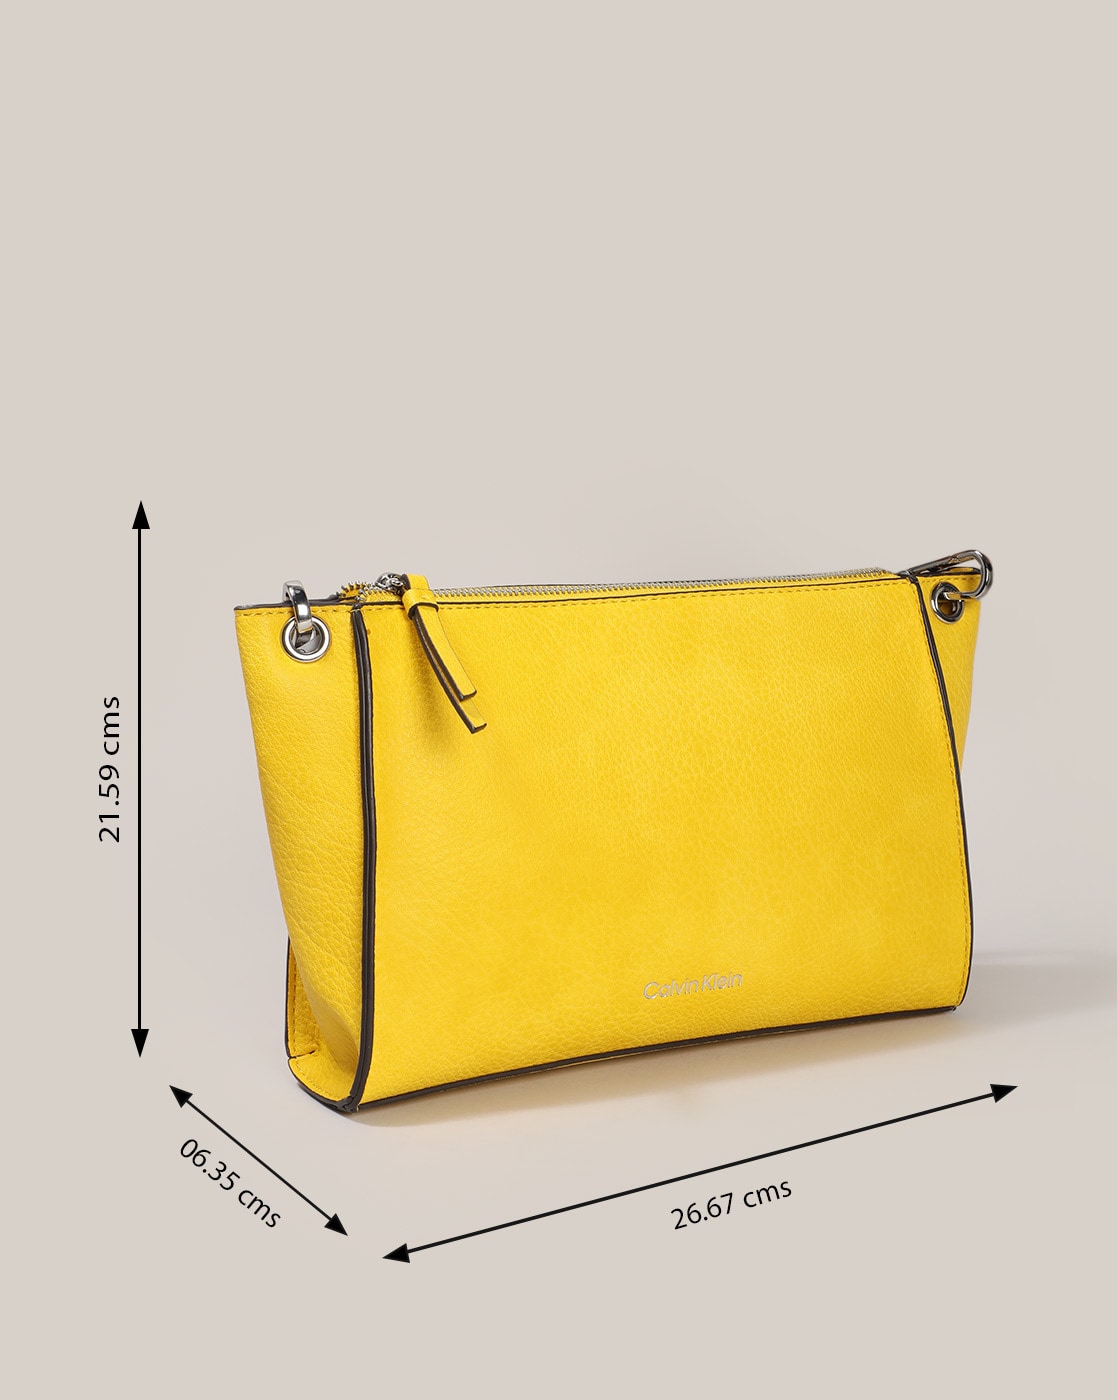 Nuovedive Italian Purse Mustard Yellow Leather Shoulder Handbag | eBay